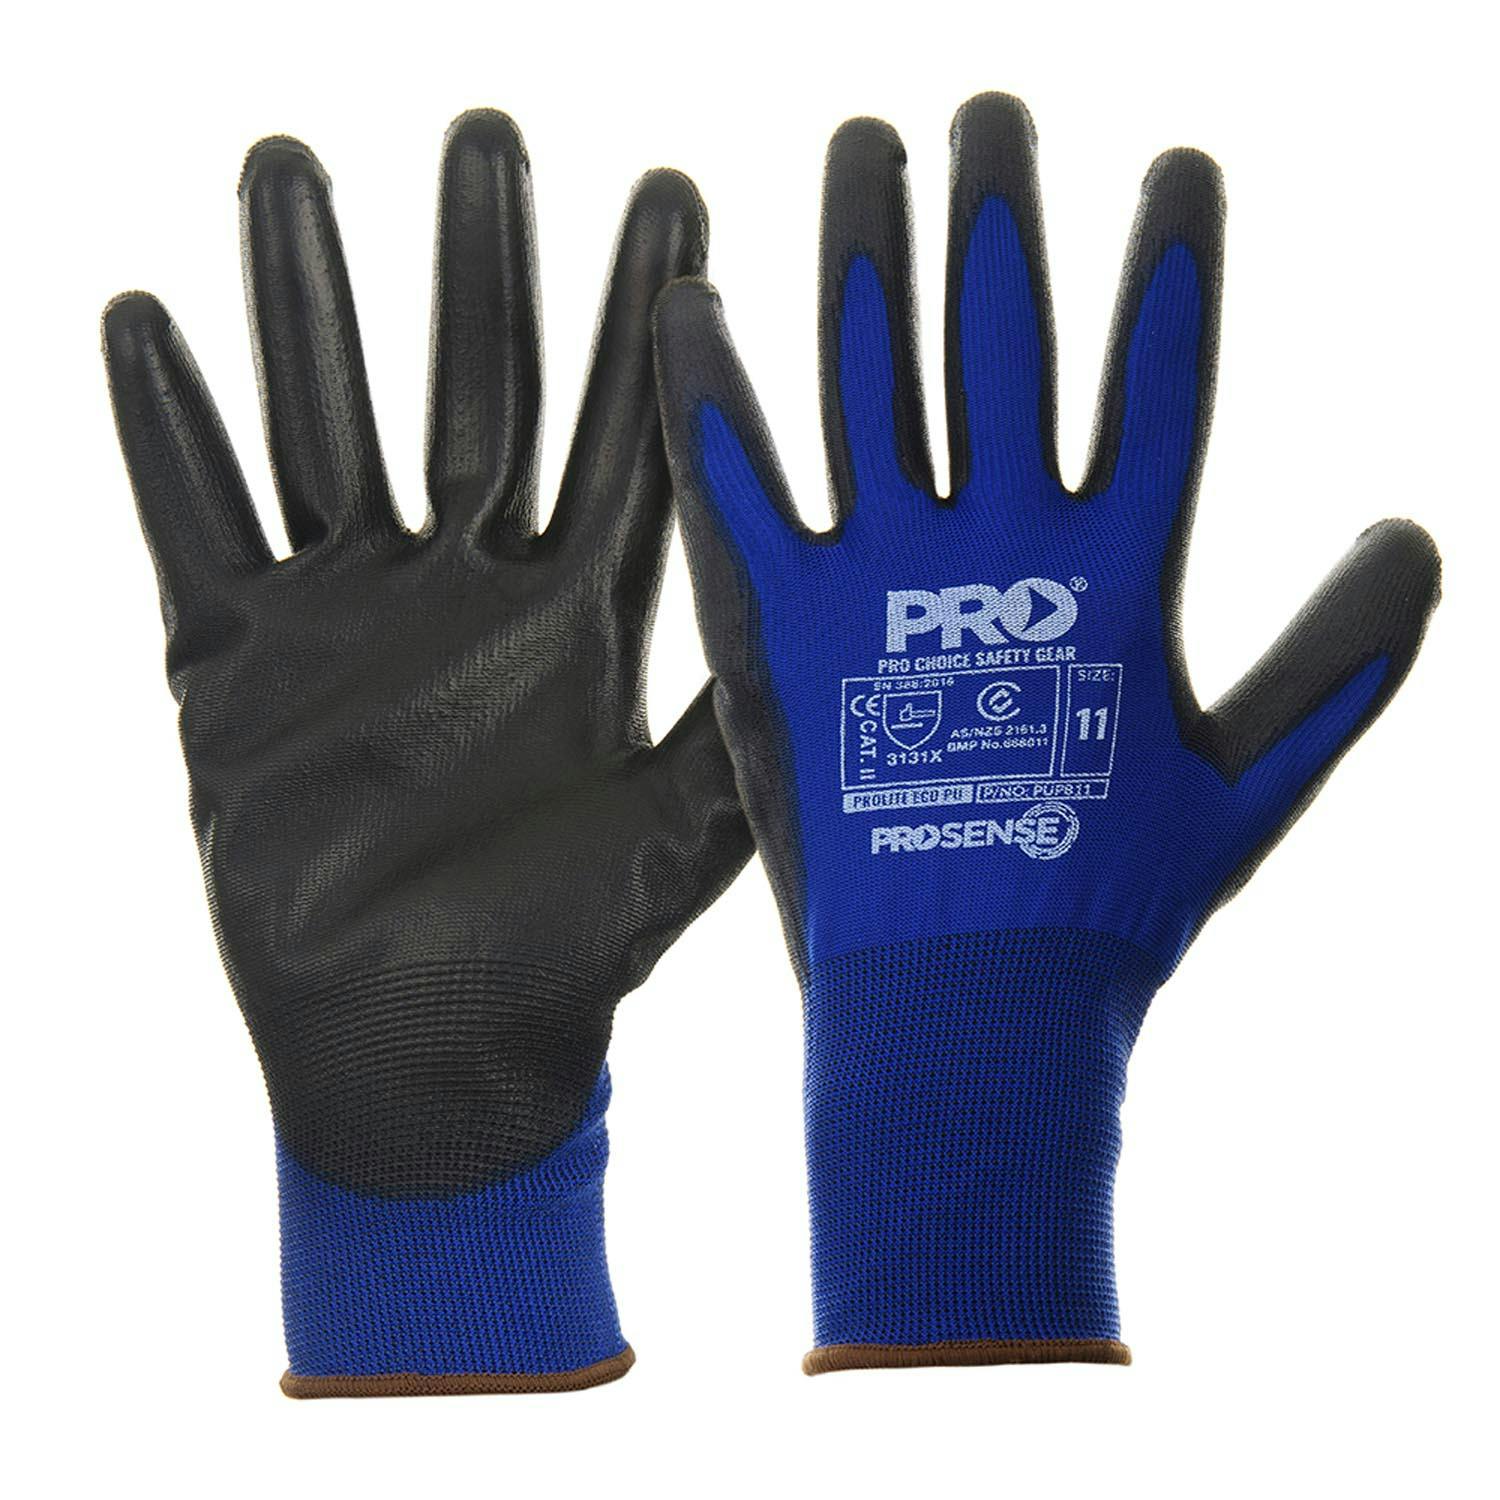 Pro Choice Prosense Prolite Eco Pu Glove 12Pr Bulk Pack_4